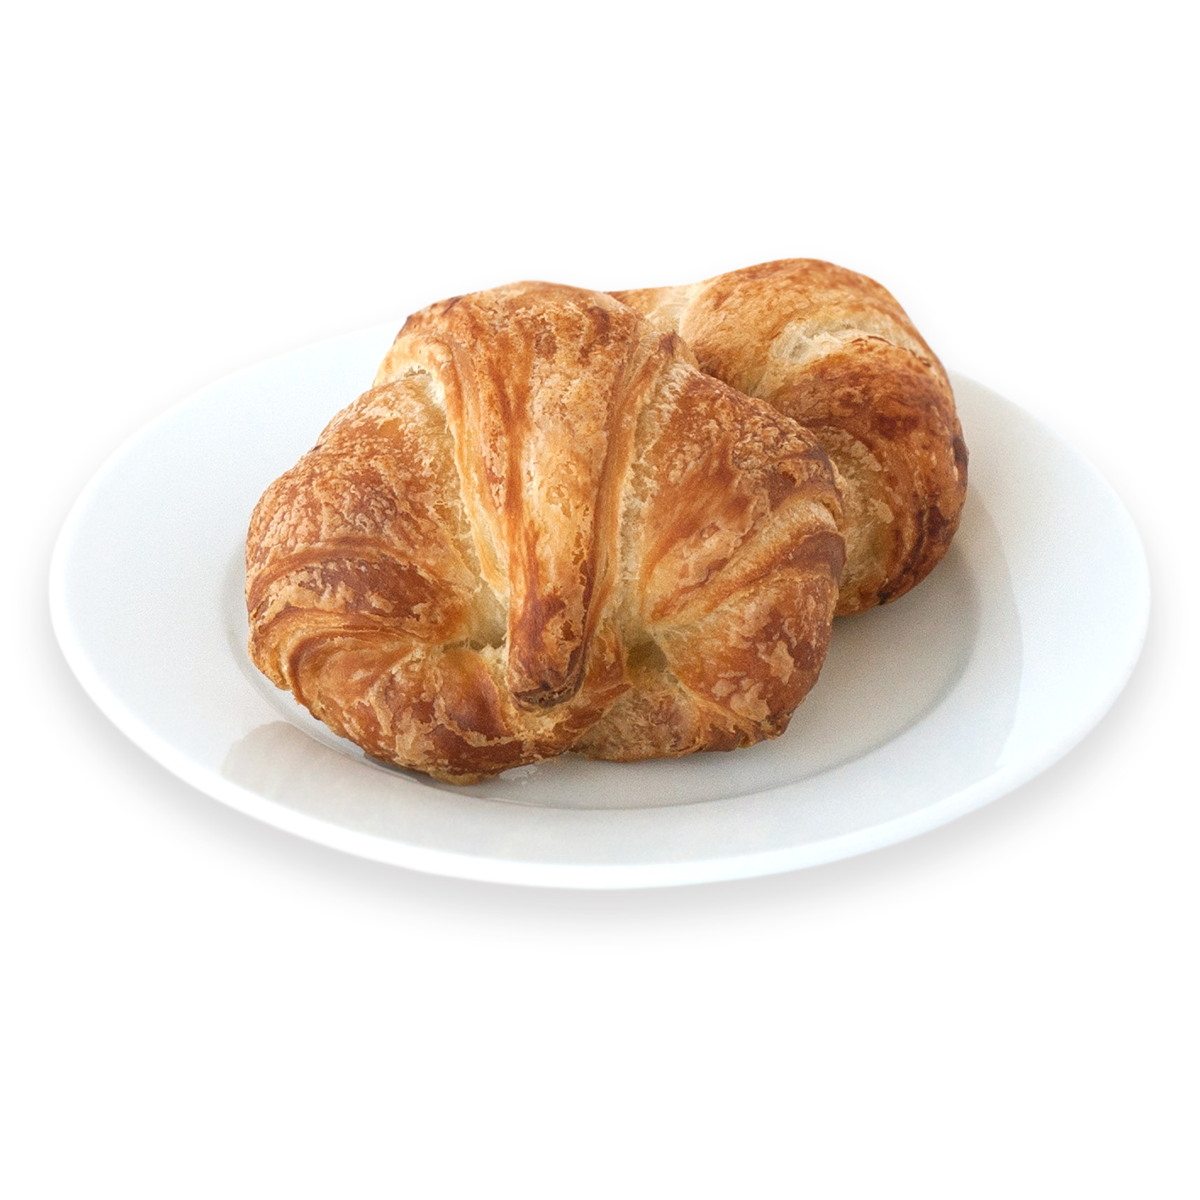 3 ifiGOURMET — Butter oz Croissant